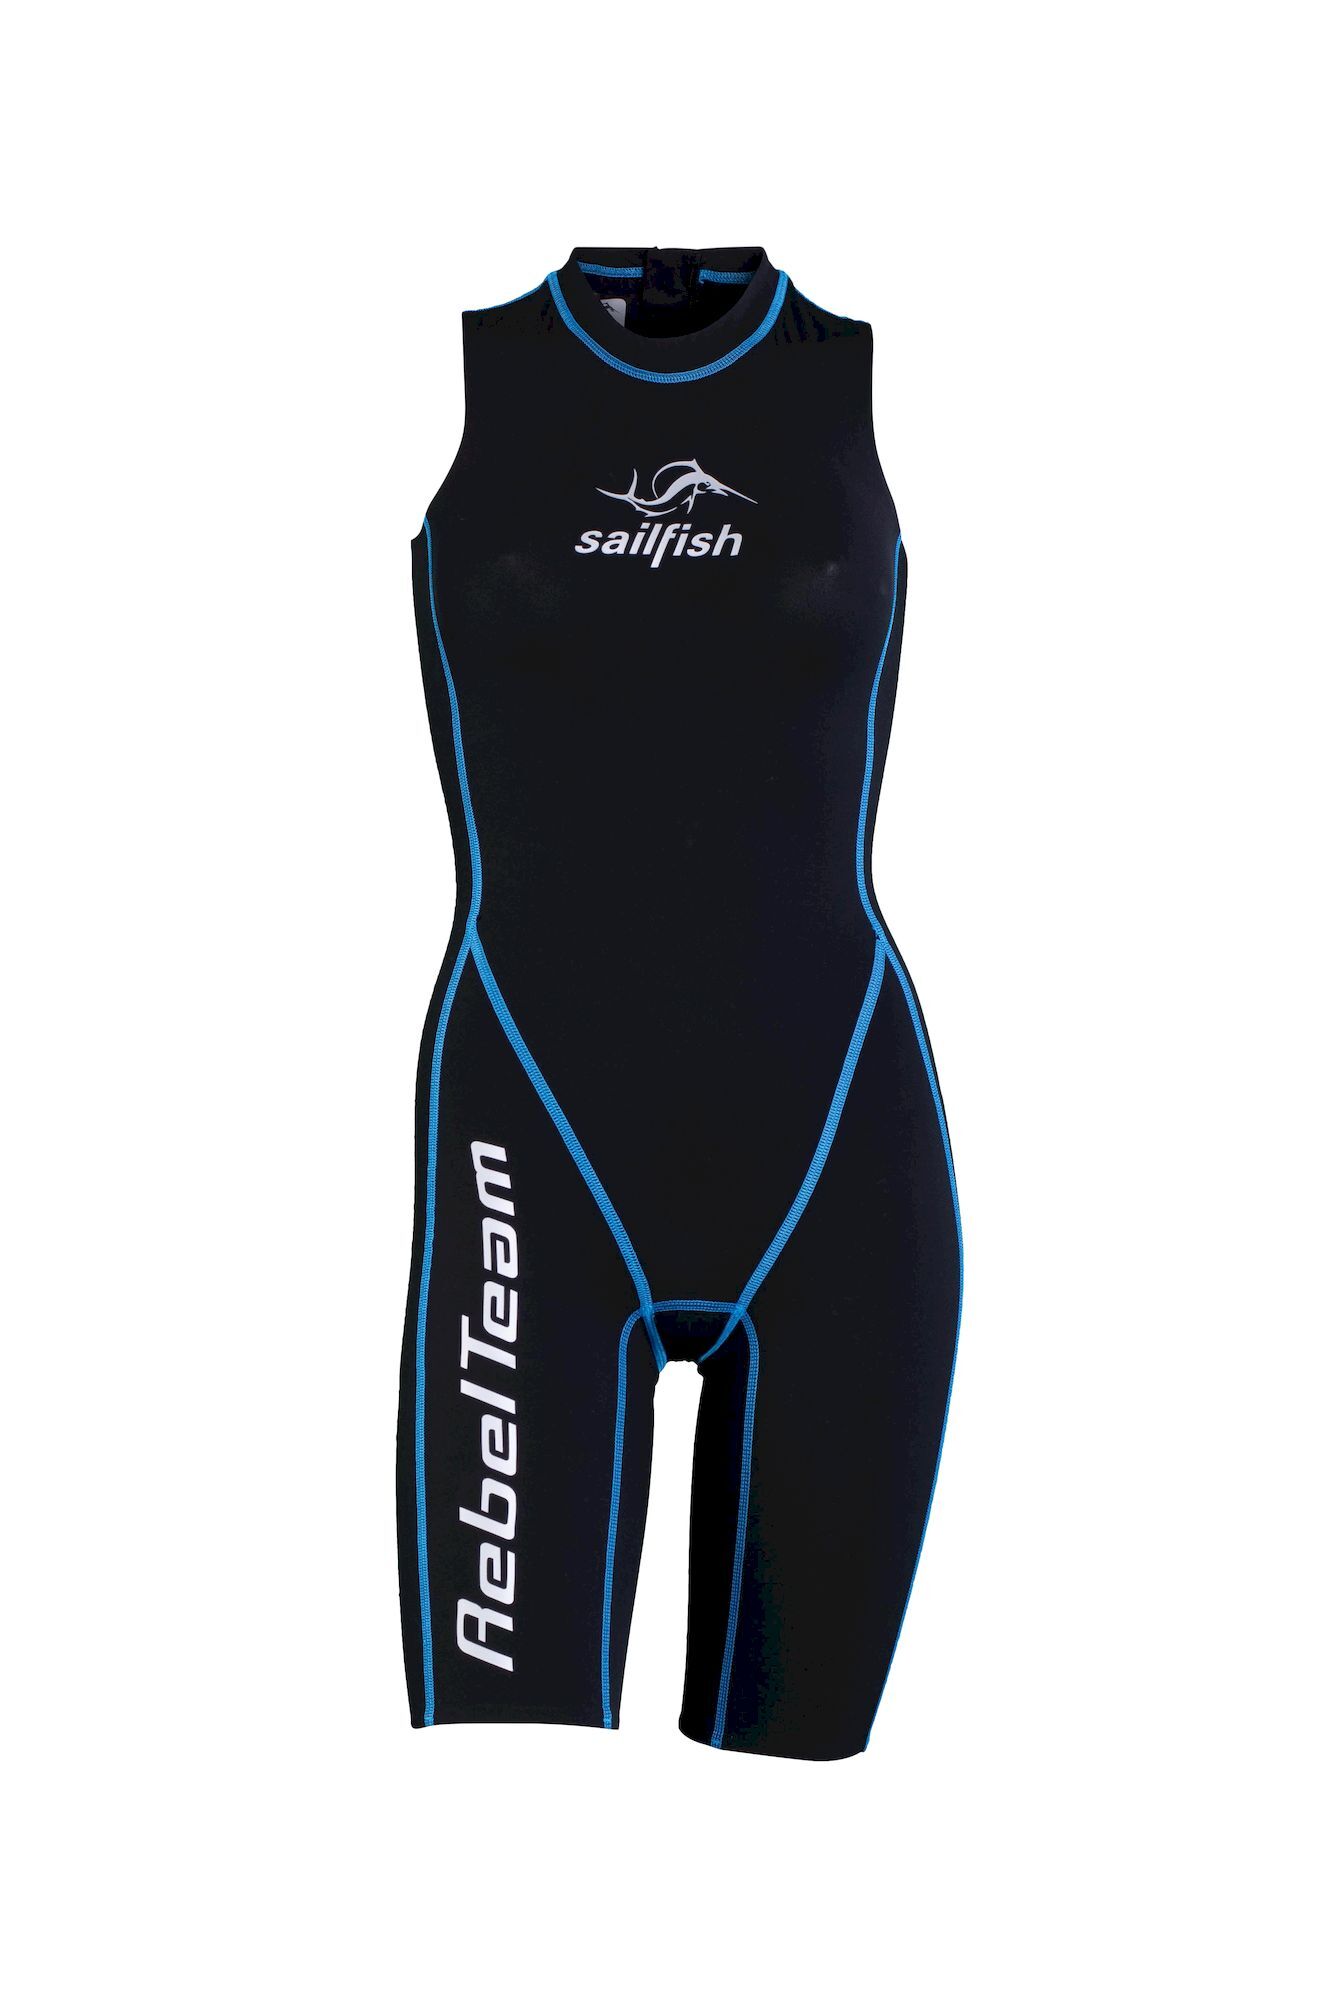 Sailfish Womens Swimskin Rebel Team 3 - Tri suit - Women's | Hardloop